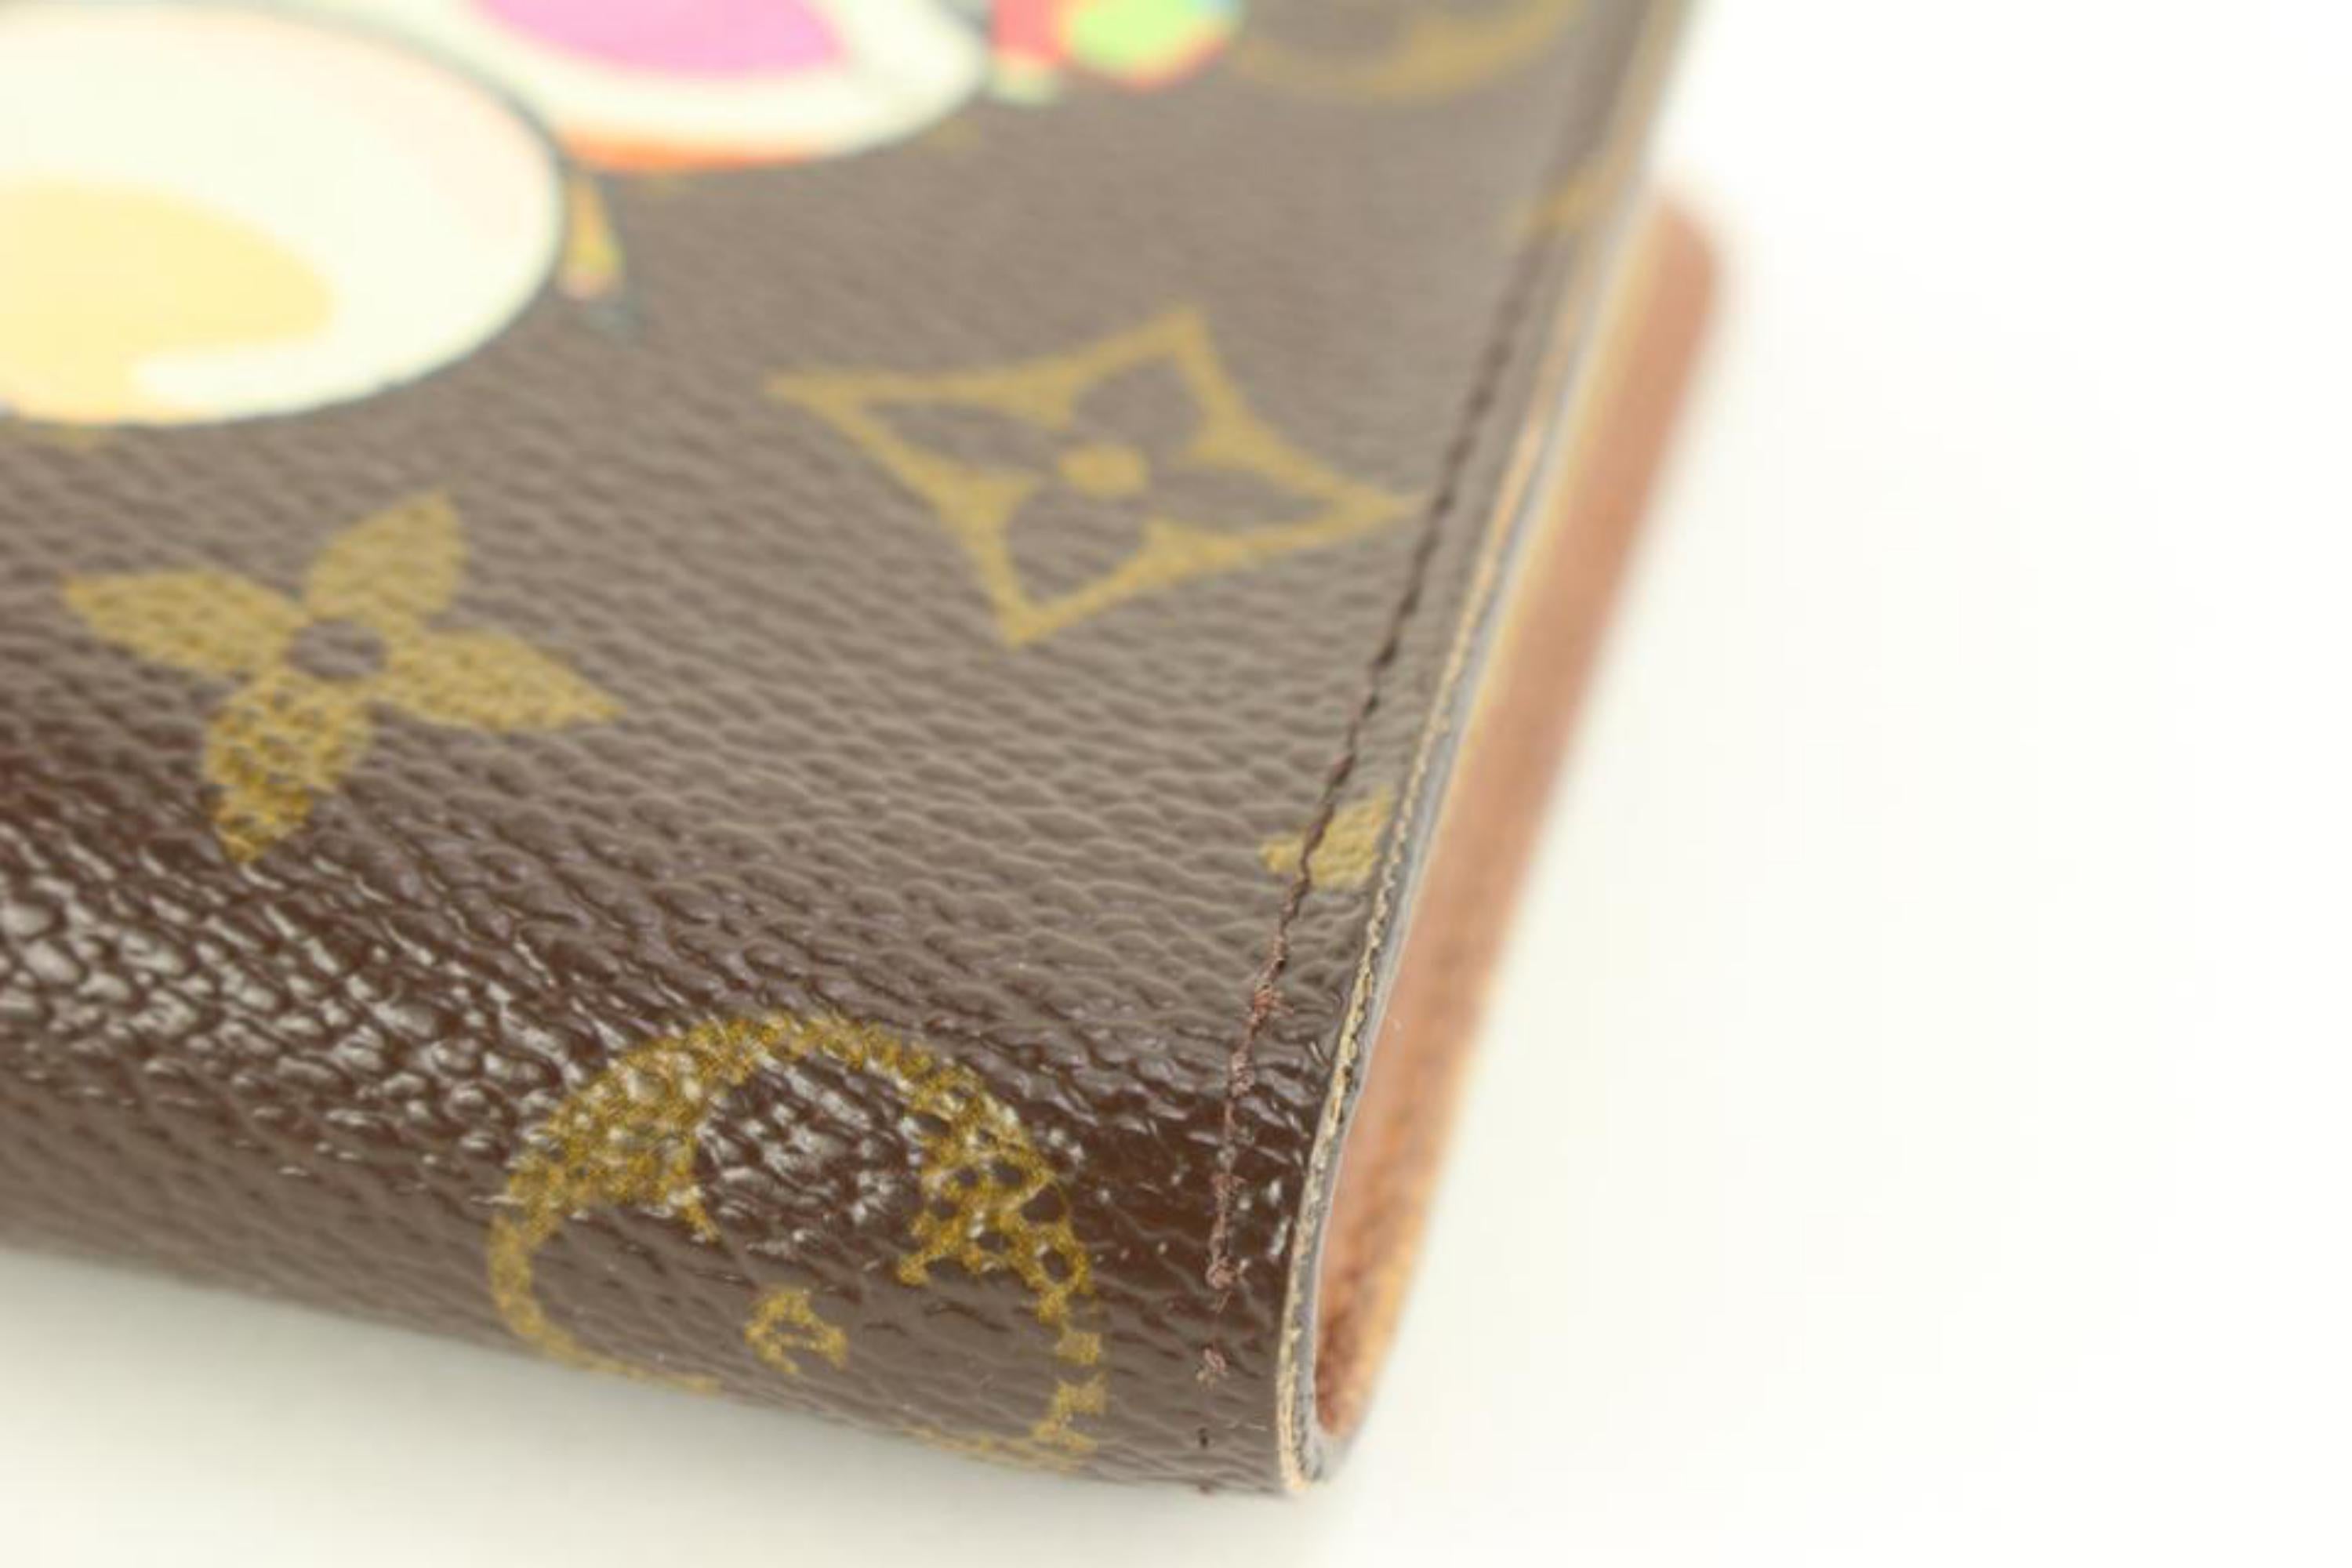 Louis Vuitton Murakami Monogram Panda Zippy Wallet Long 35L26a